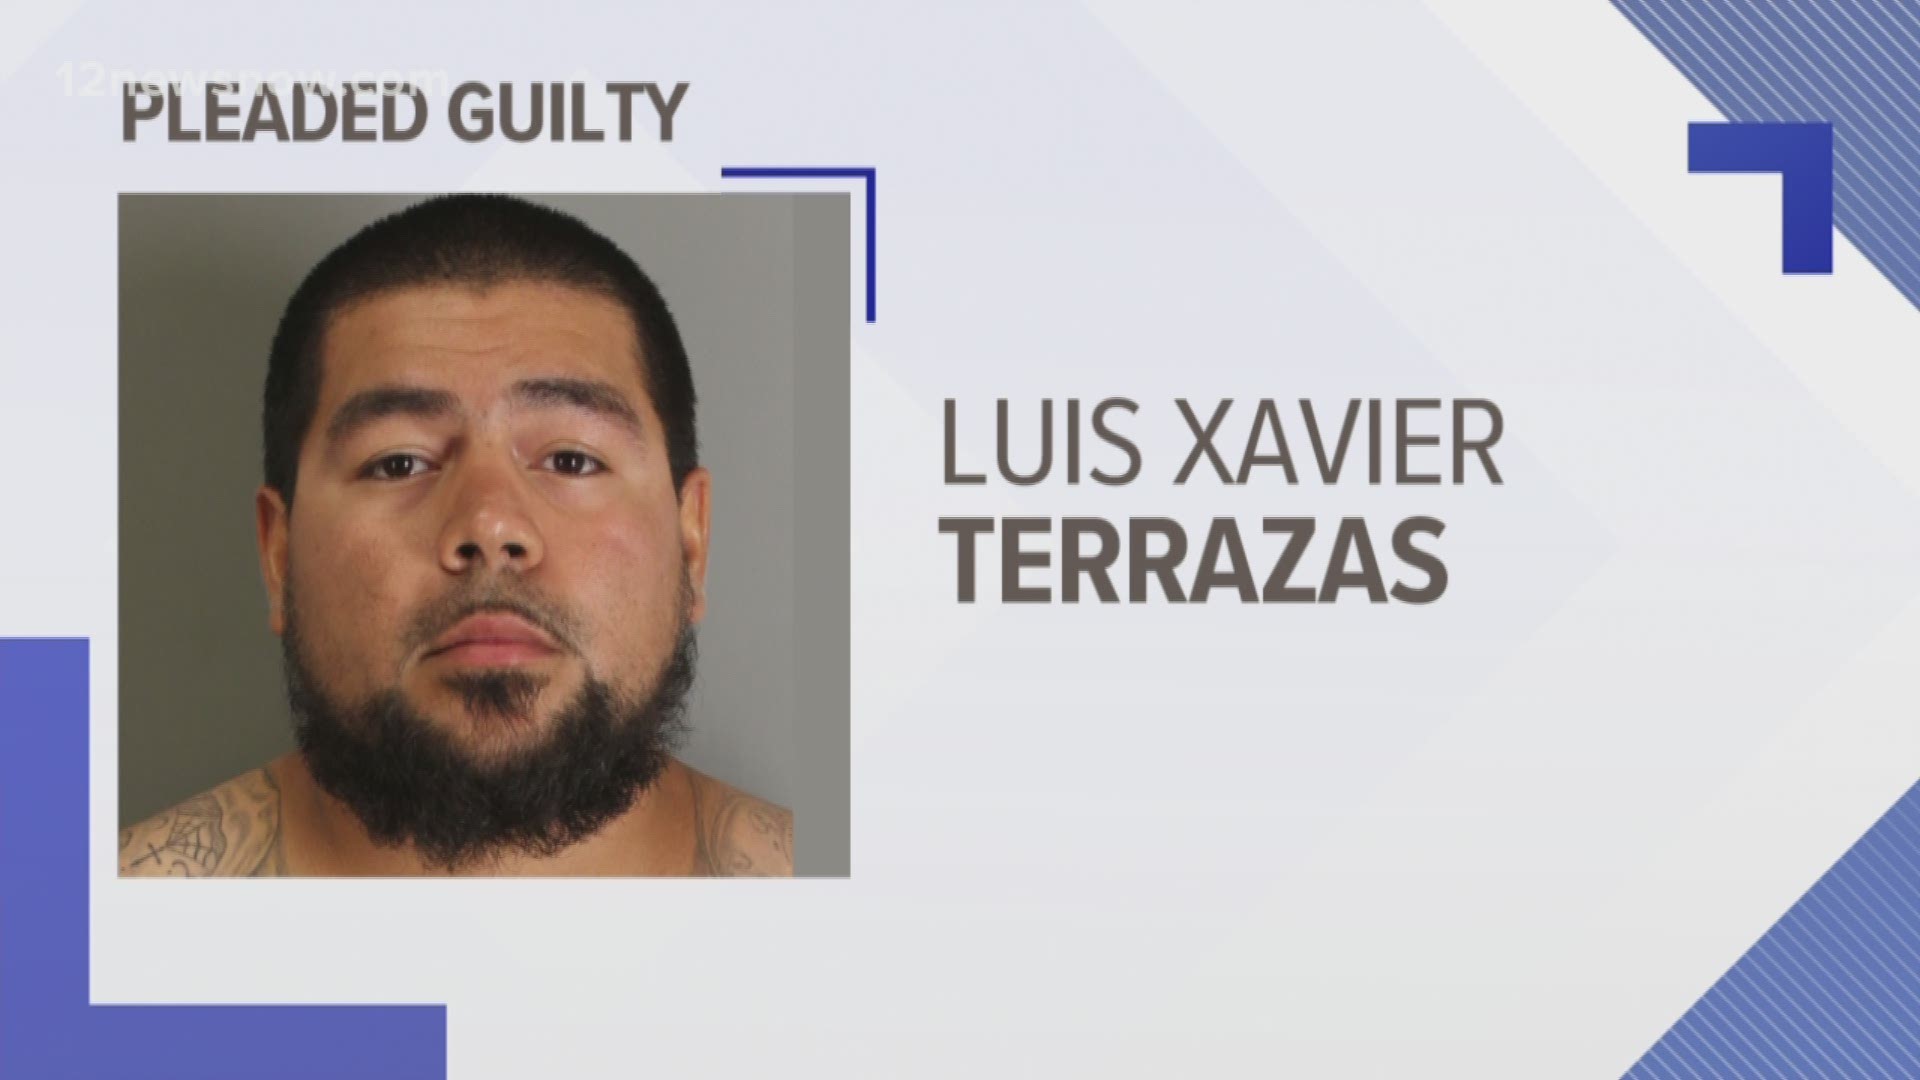 Luis Xavier Terrazas was sentenced to 12 years in prison.